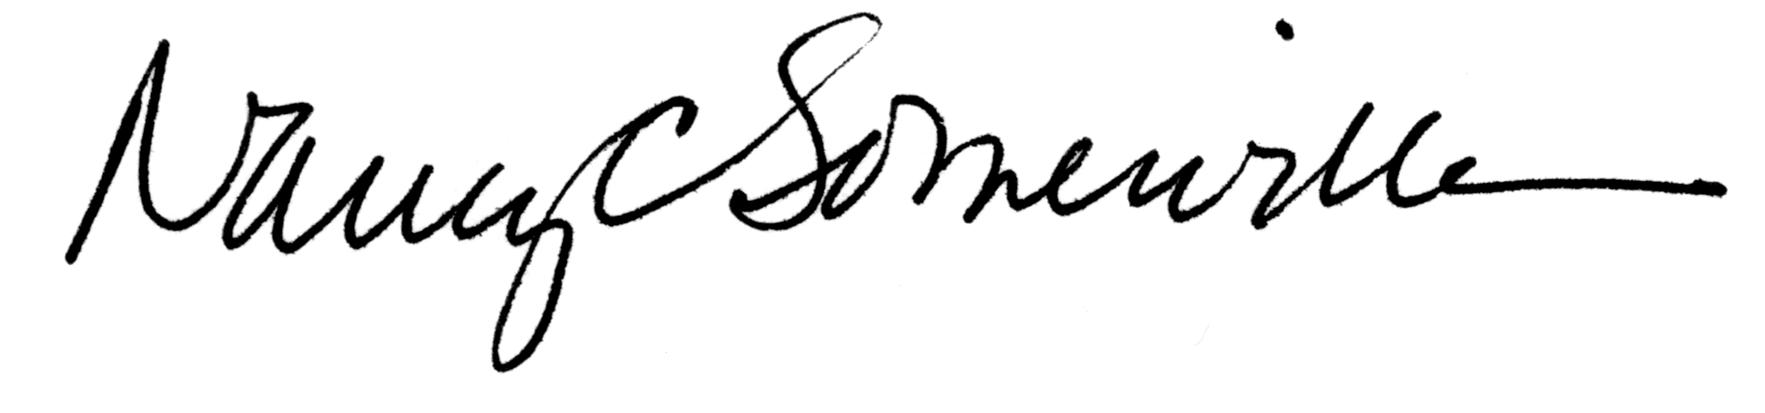 Nancy Somerville signature